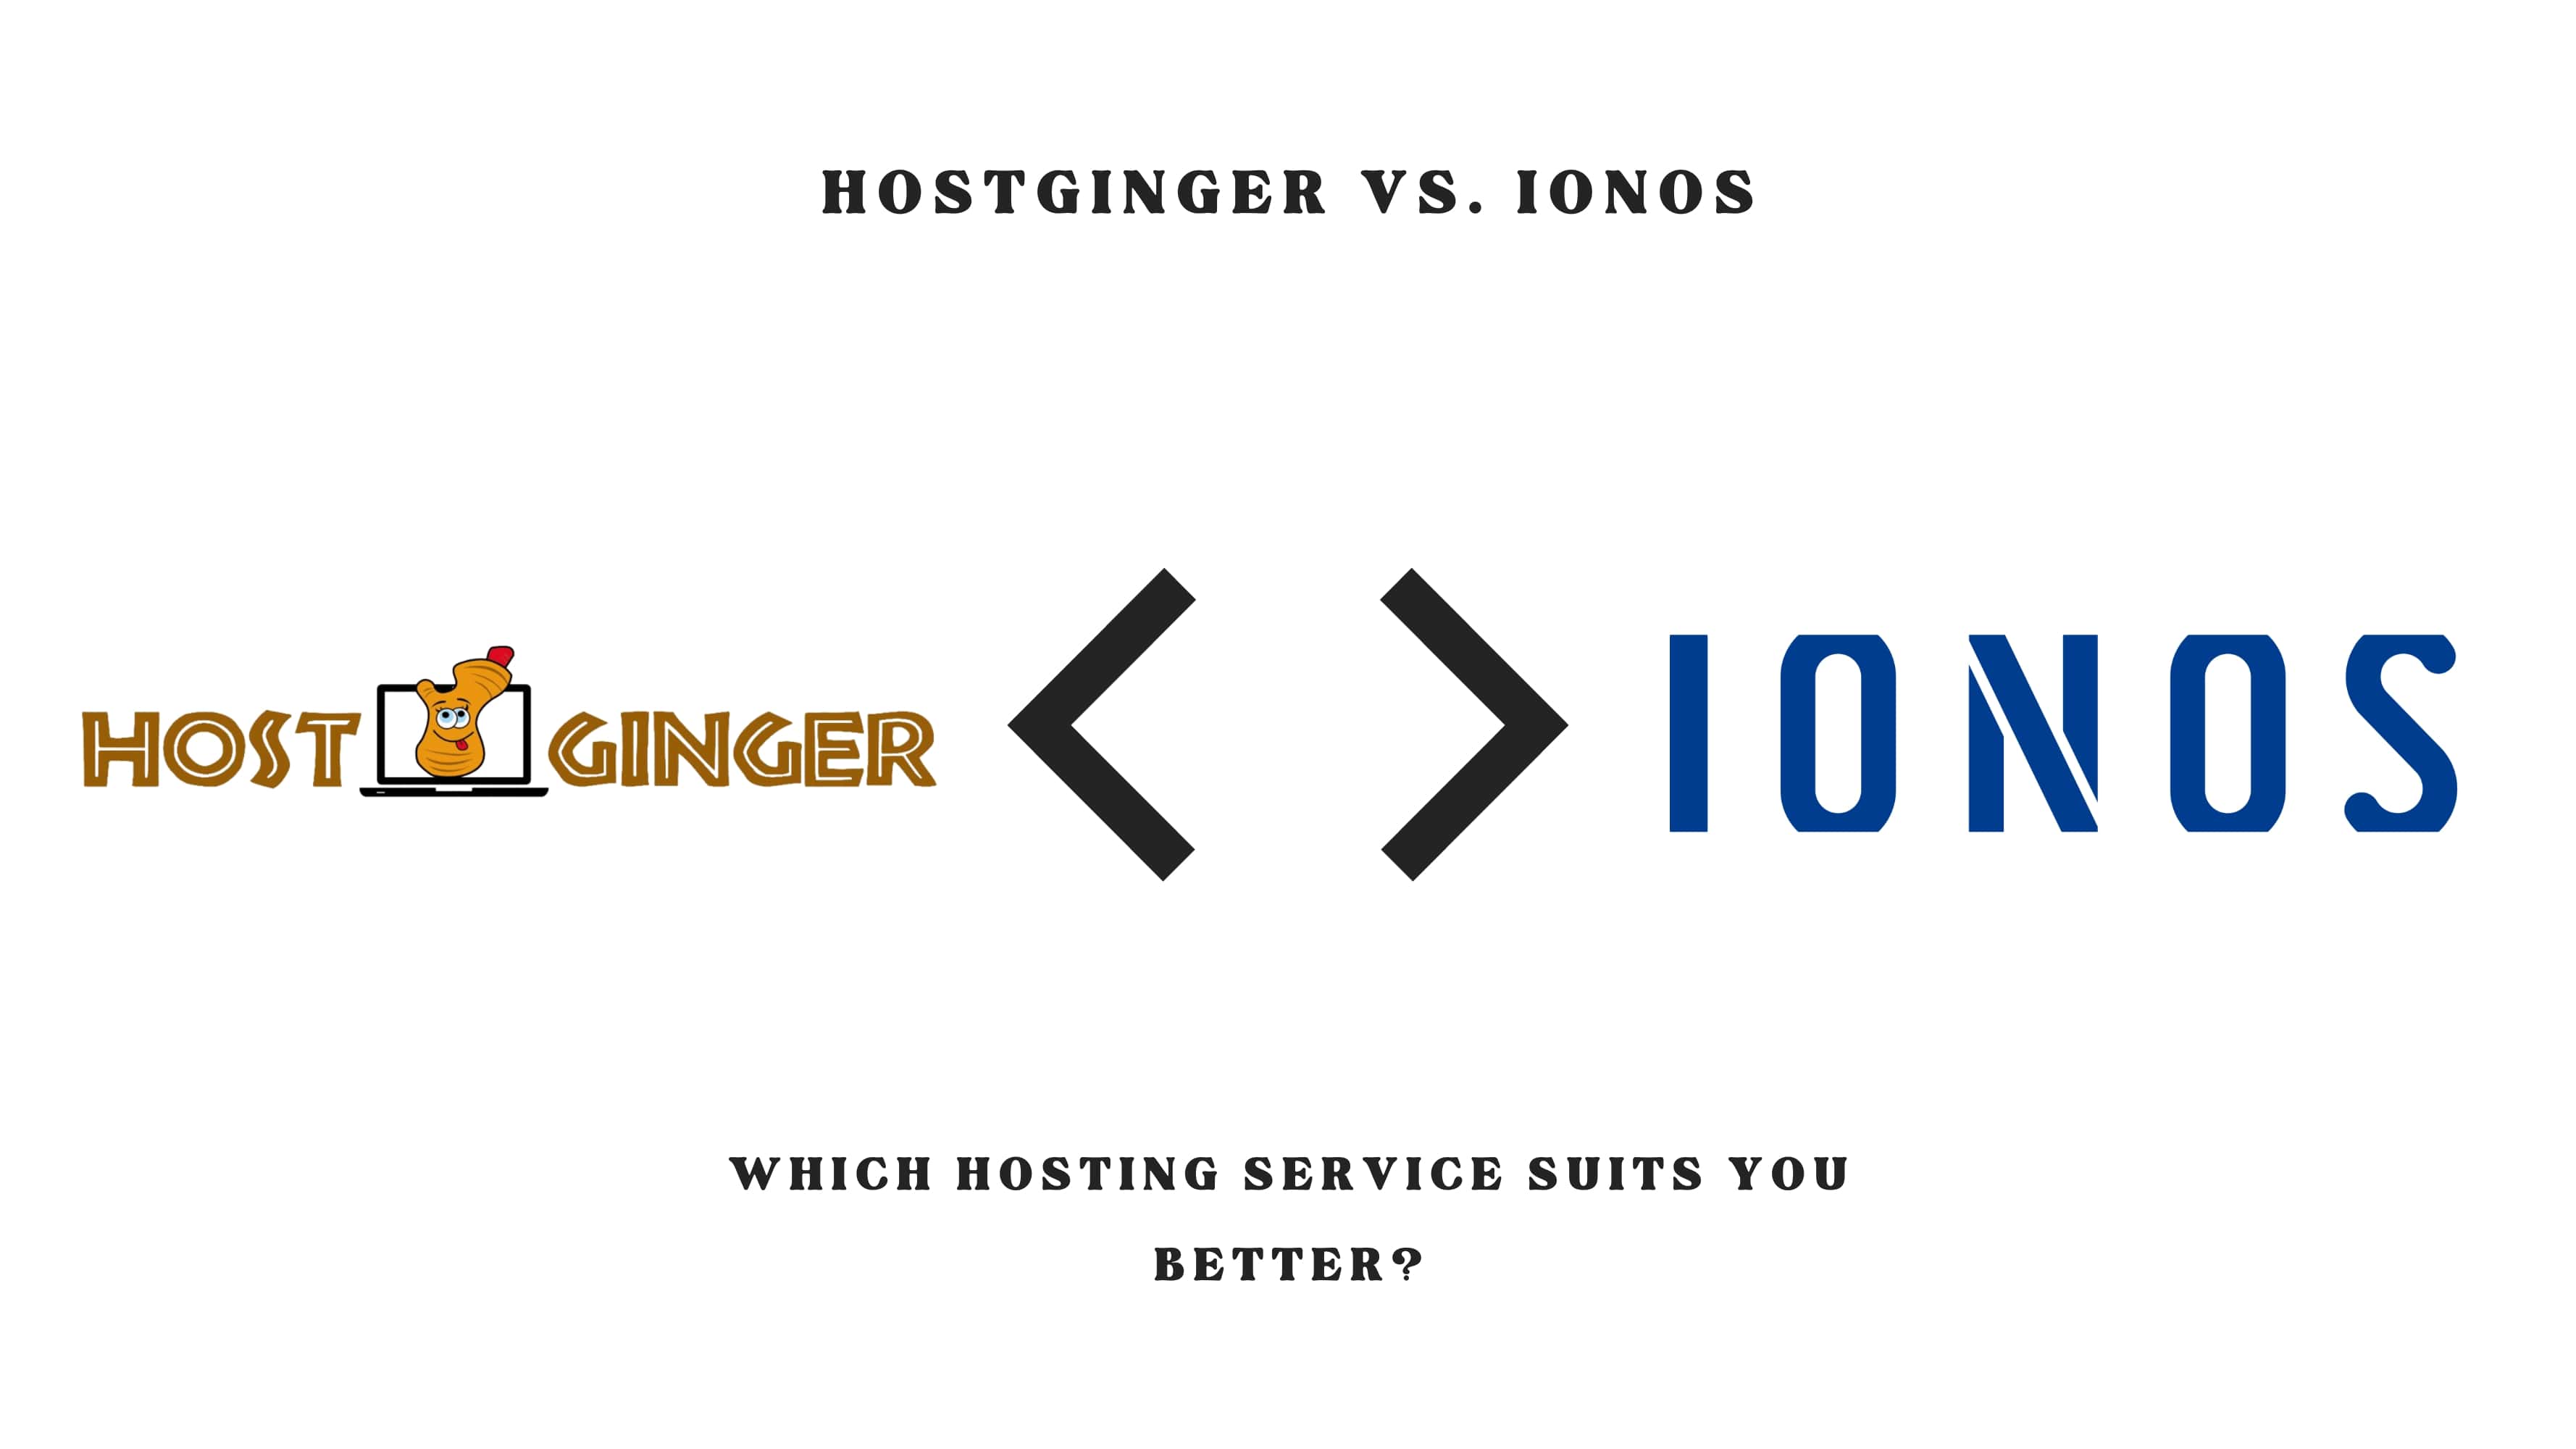 Comparing Hosting Prices: Hostginger vs. Ionos